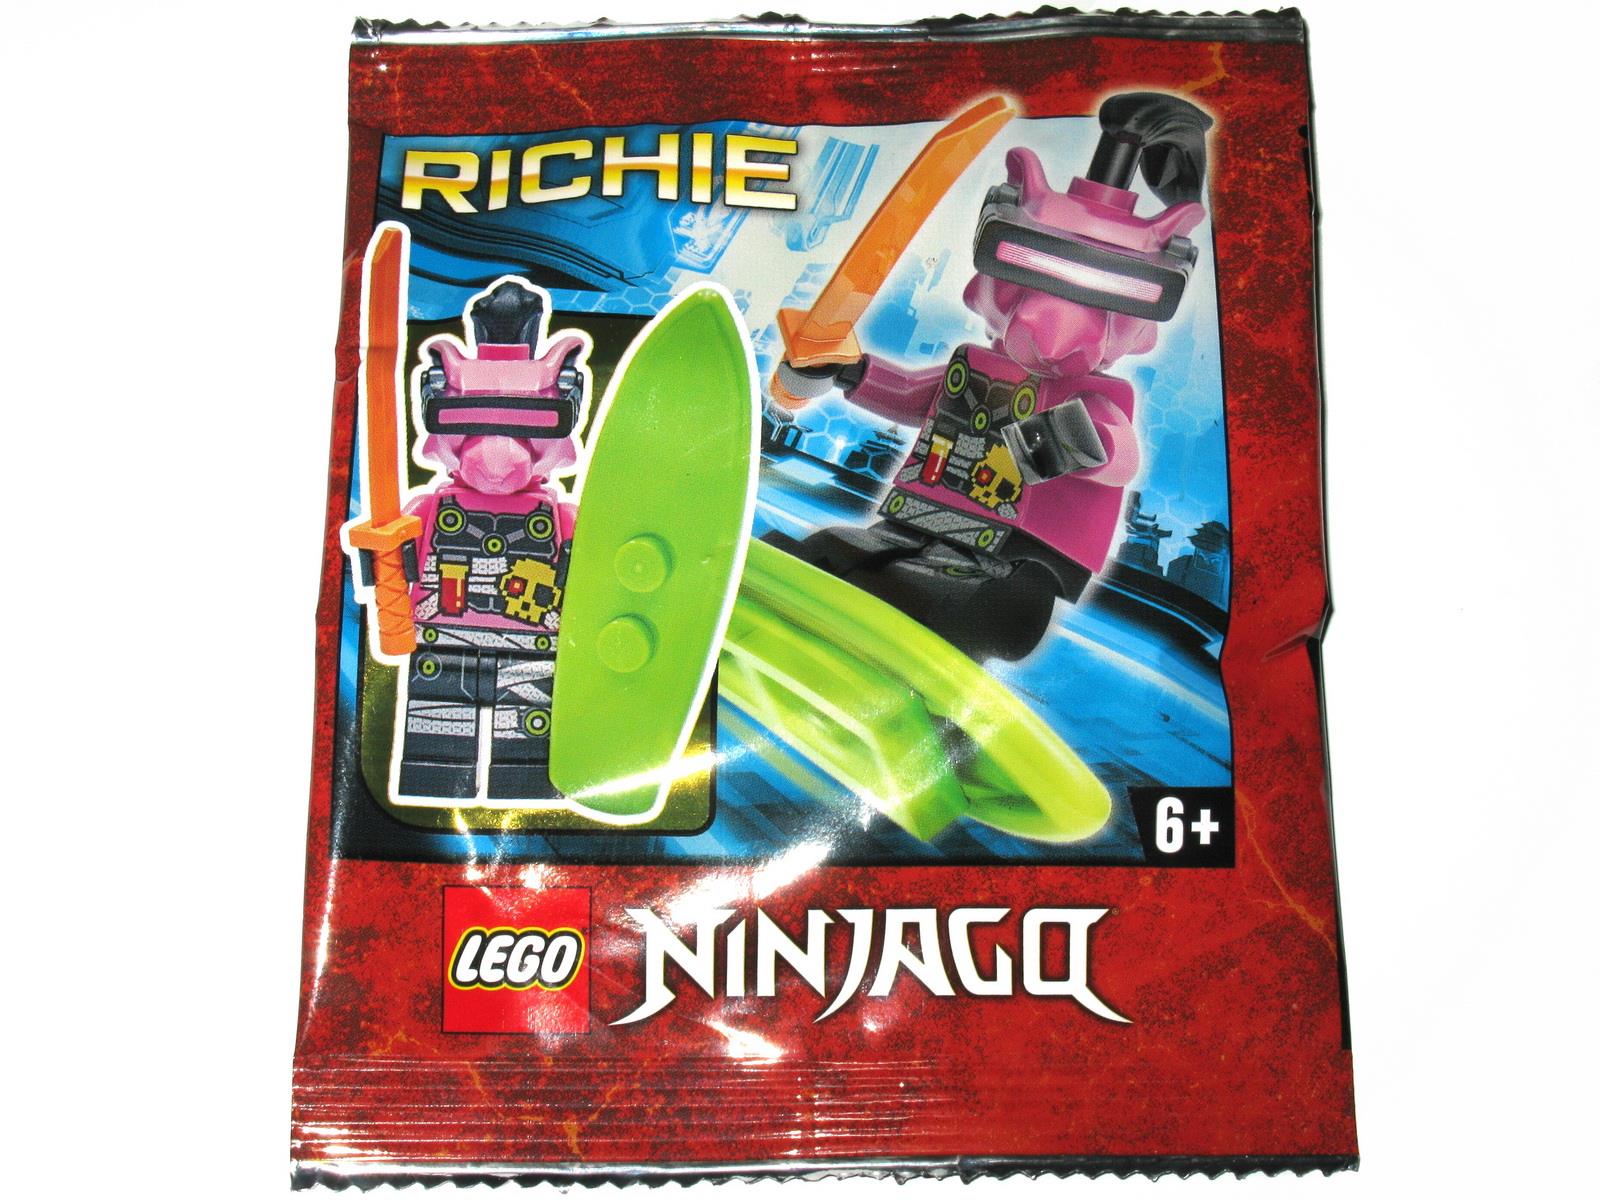 Lego® Ninjago Minifigur Richie mit Surfbrett Neu 